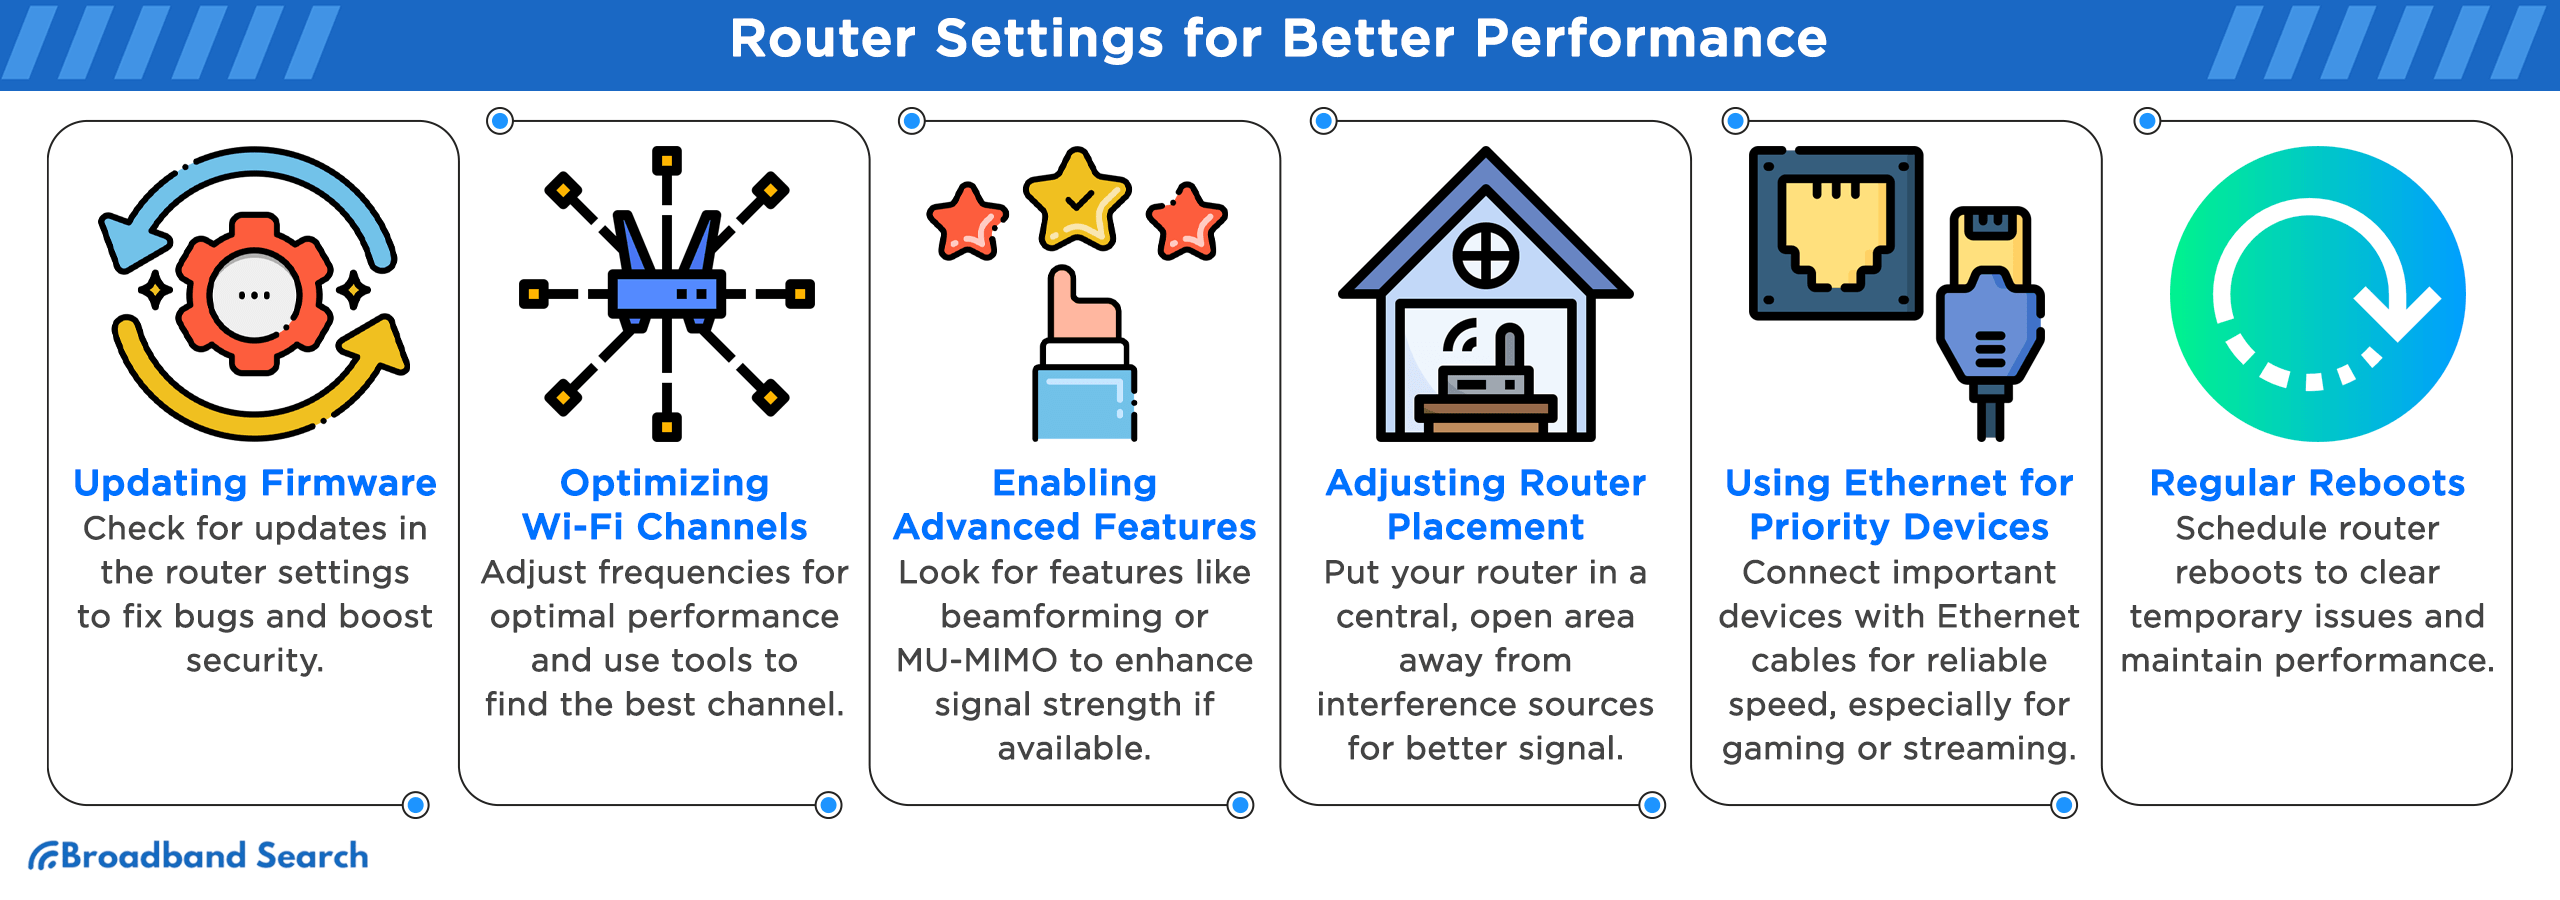 Router settings for better performance